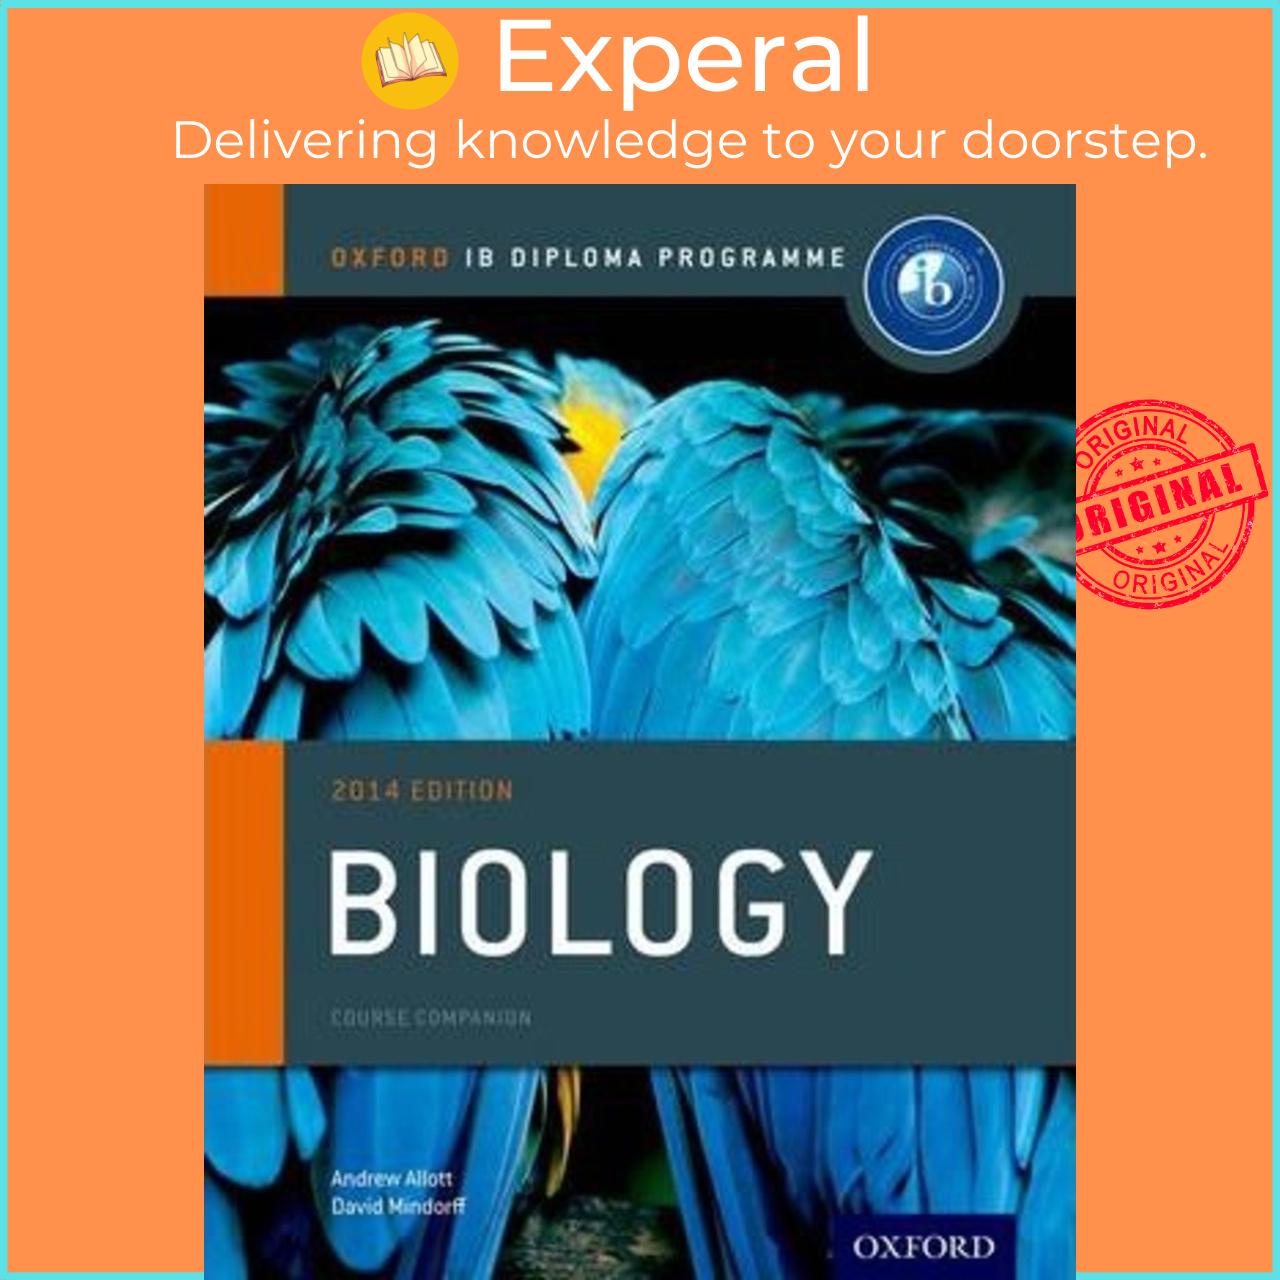 Hình ảnh Sách - Oxford IB Diploma Programme: Biology Course Companion by Andrew Allott (UK edition, paperback)